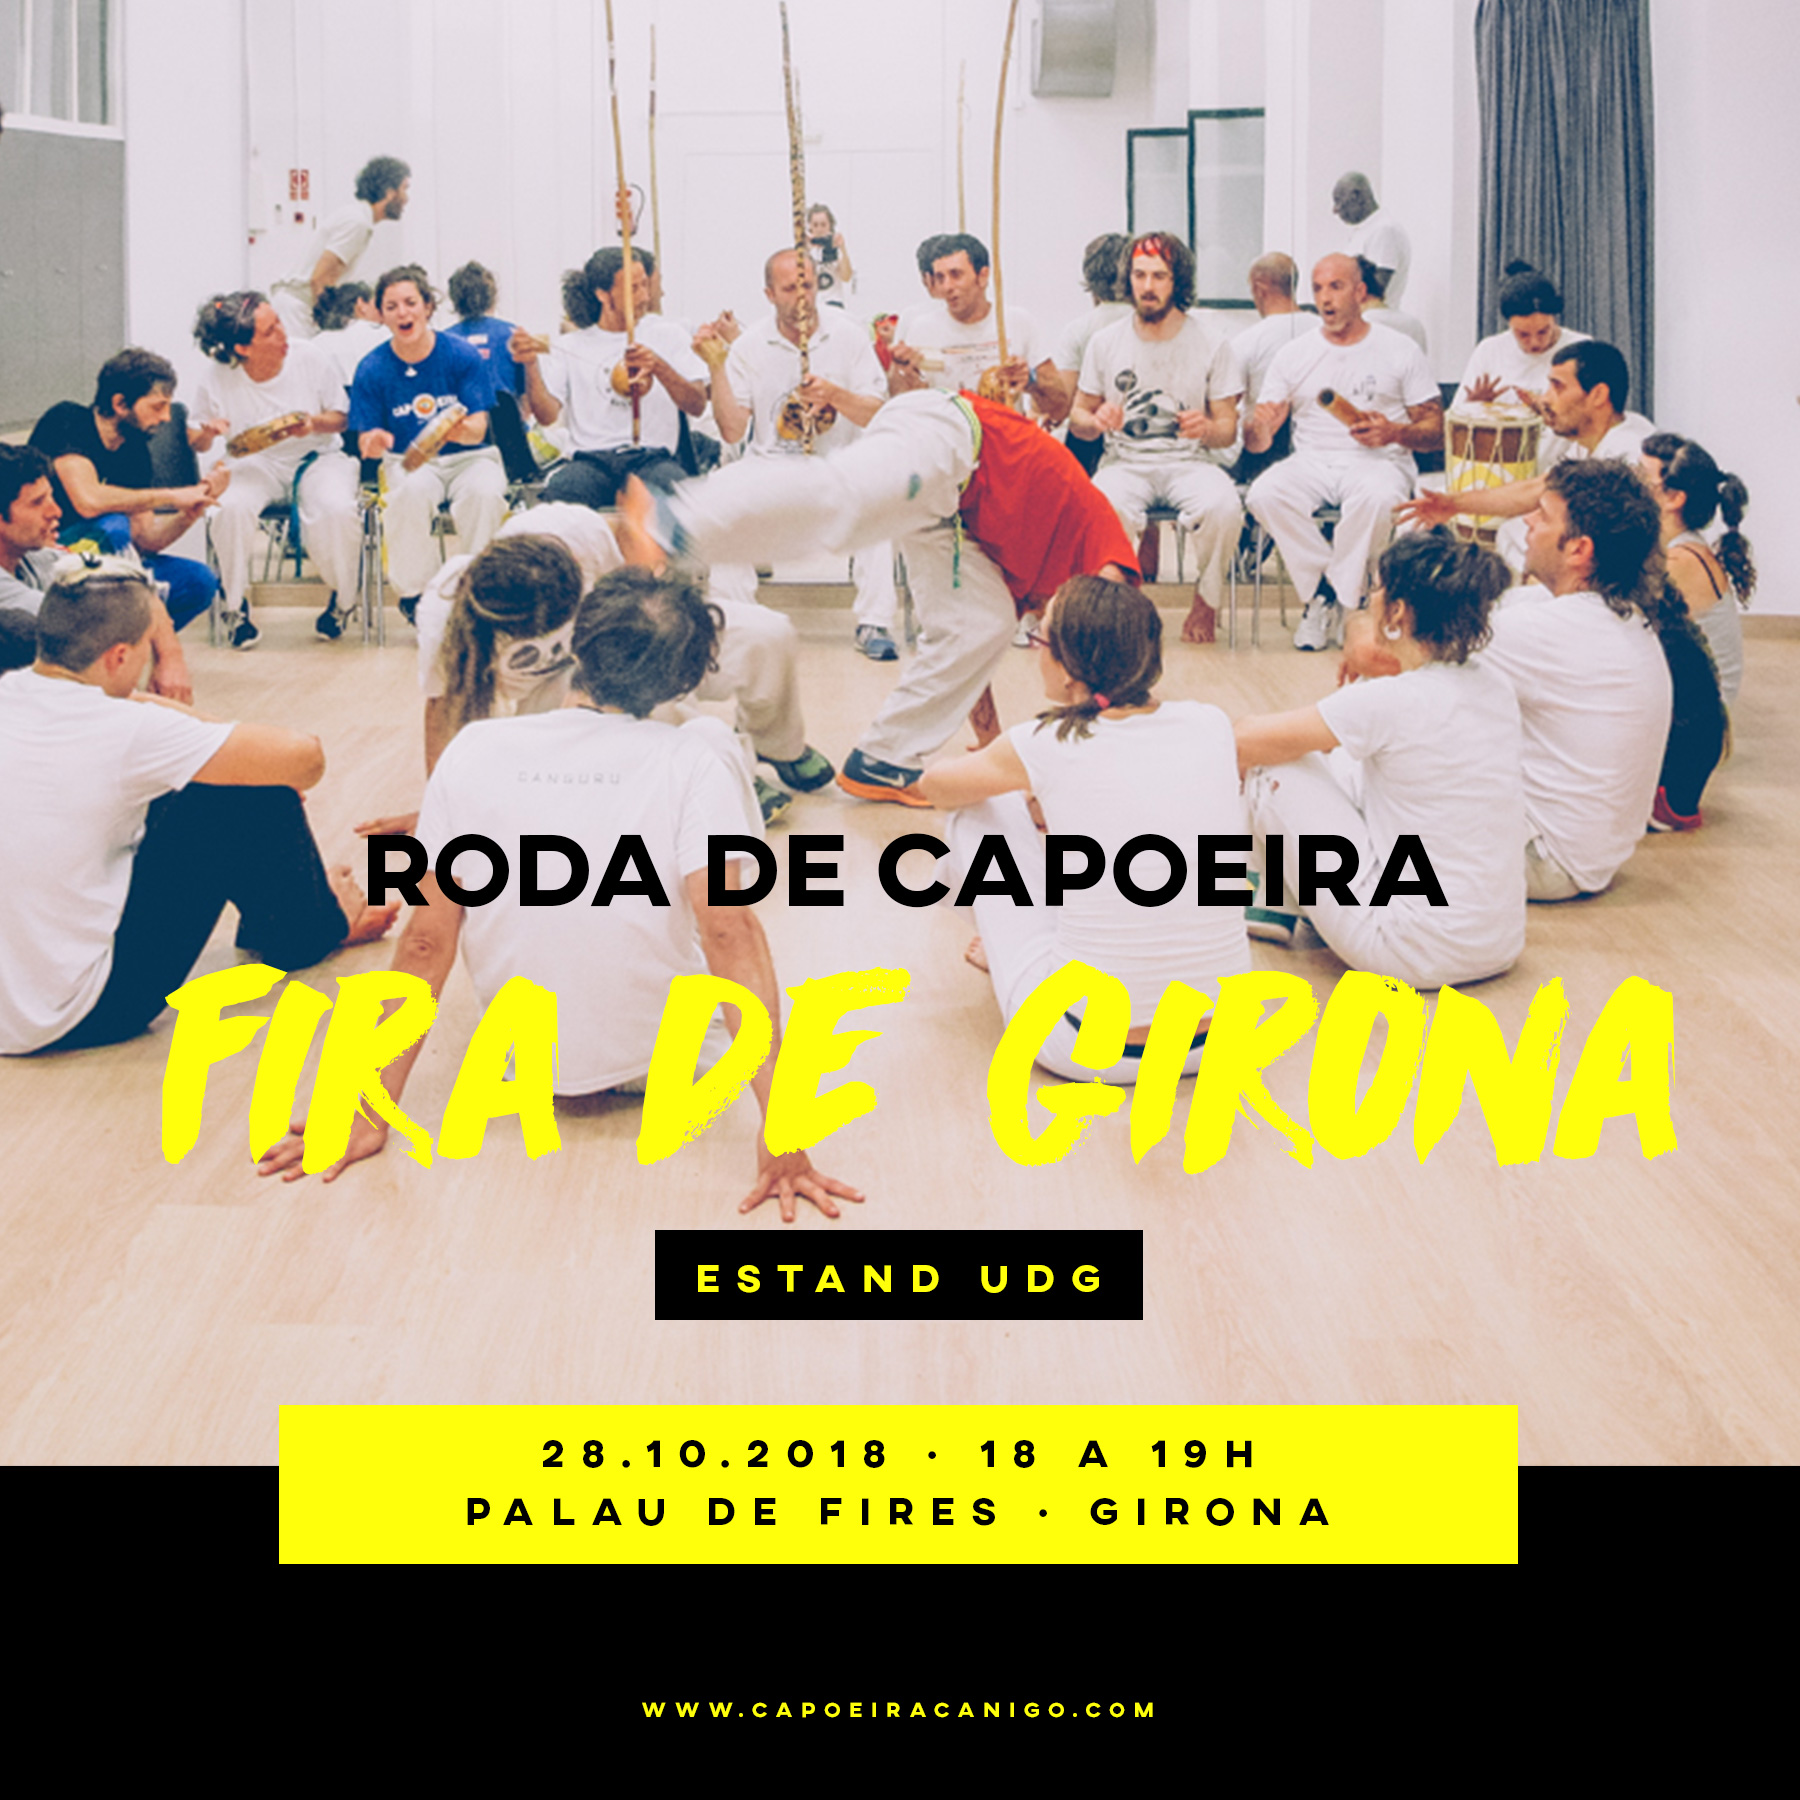 Capoeira-roda-capoeira-udg